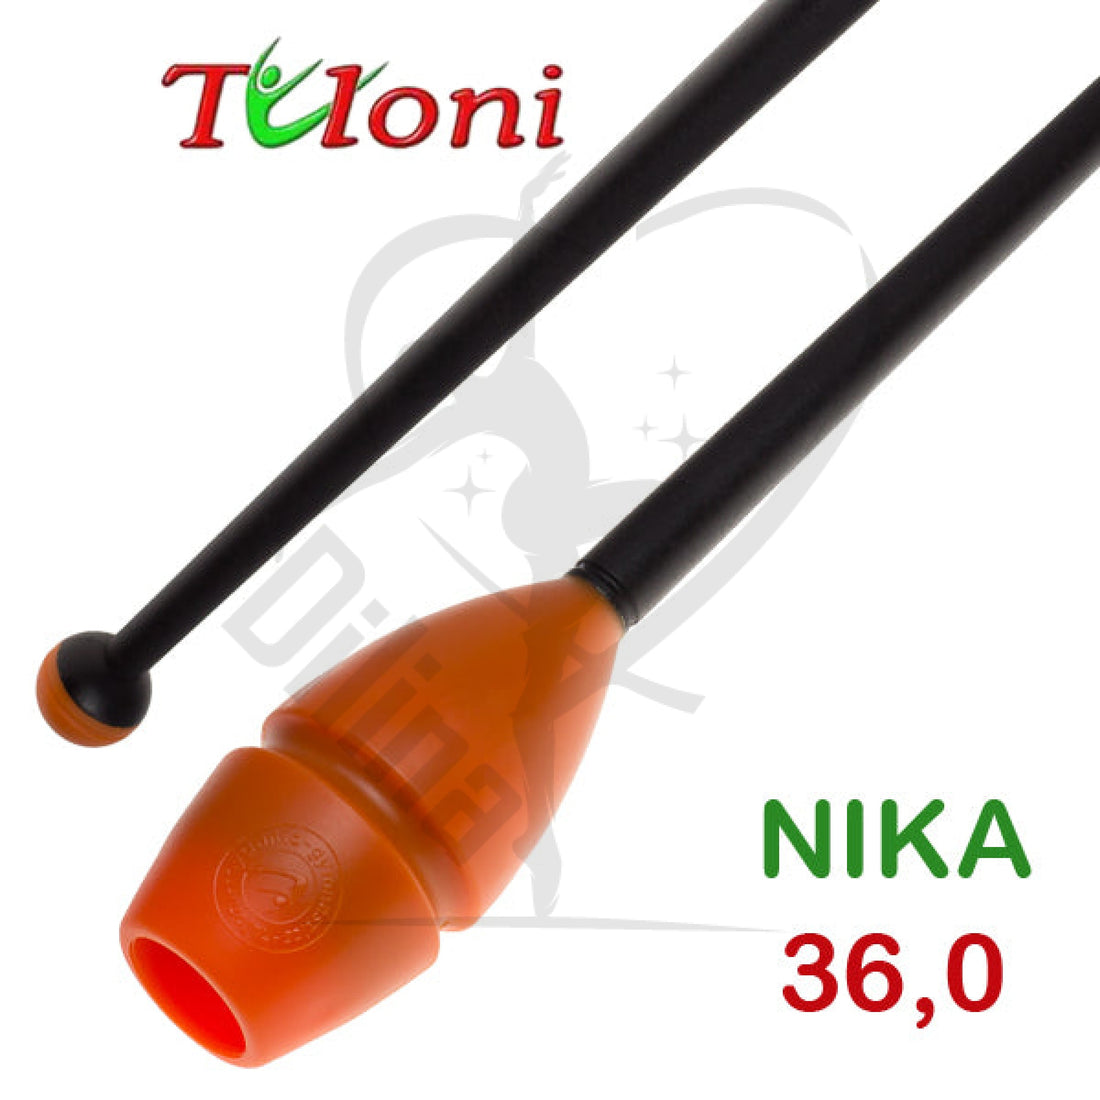 Tuloni Bi-Colour Connectable Clubs Mos. Nika 36Cm Orange X Black